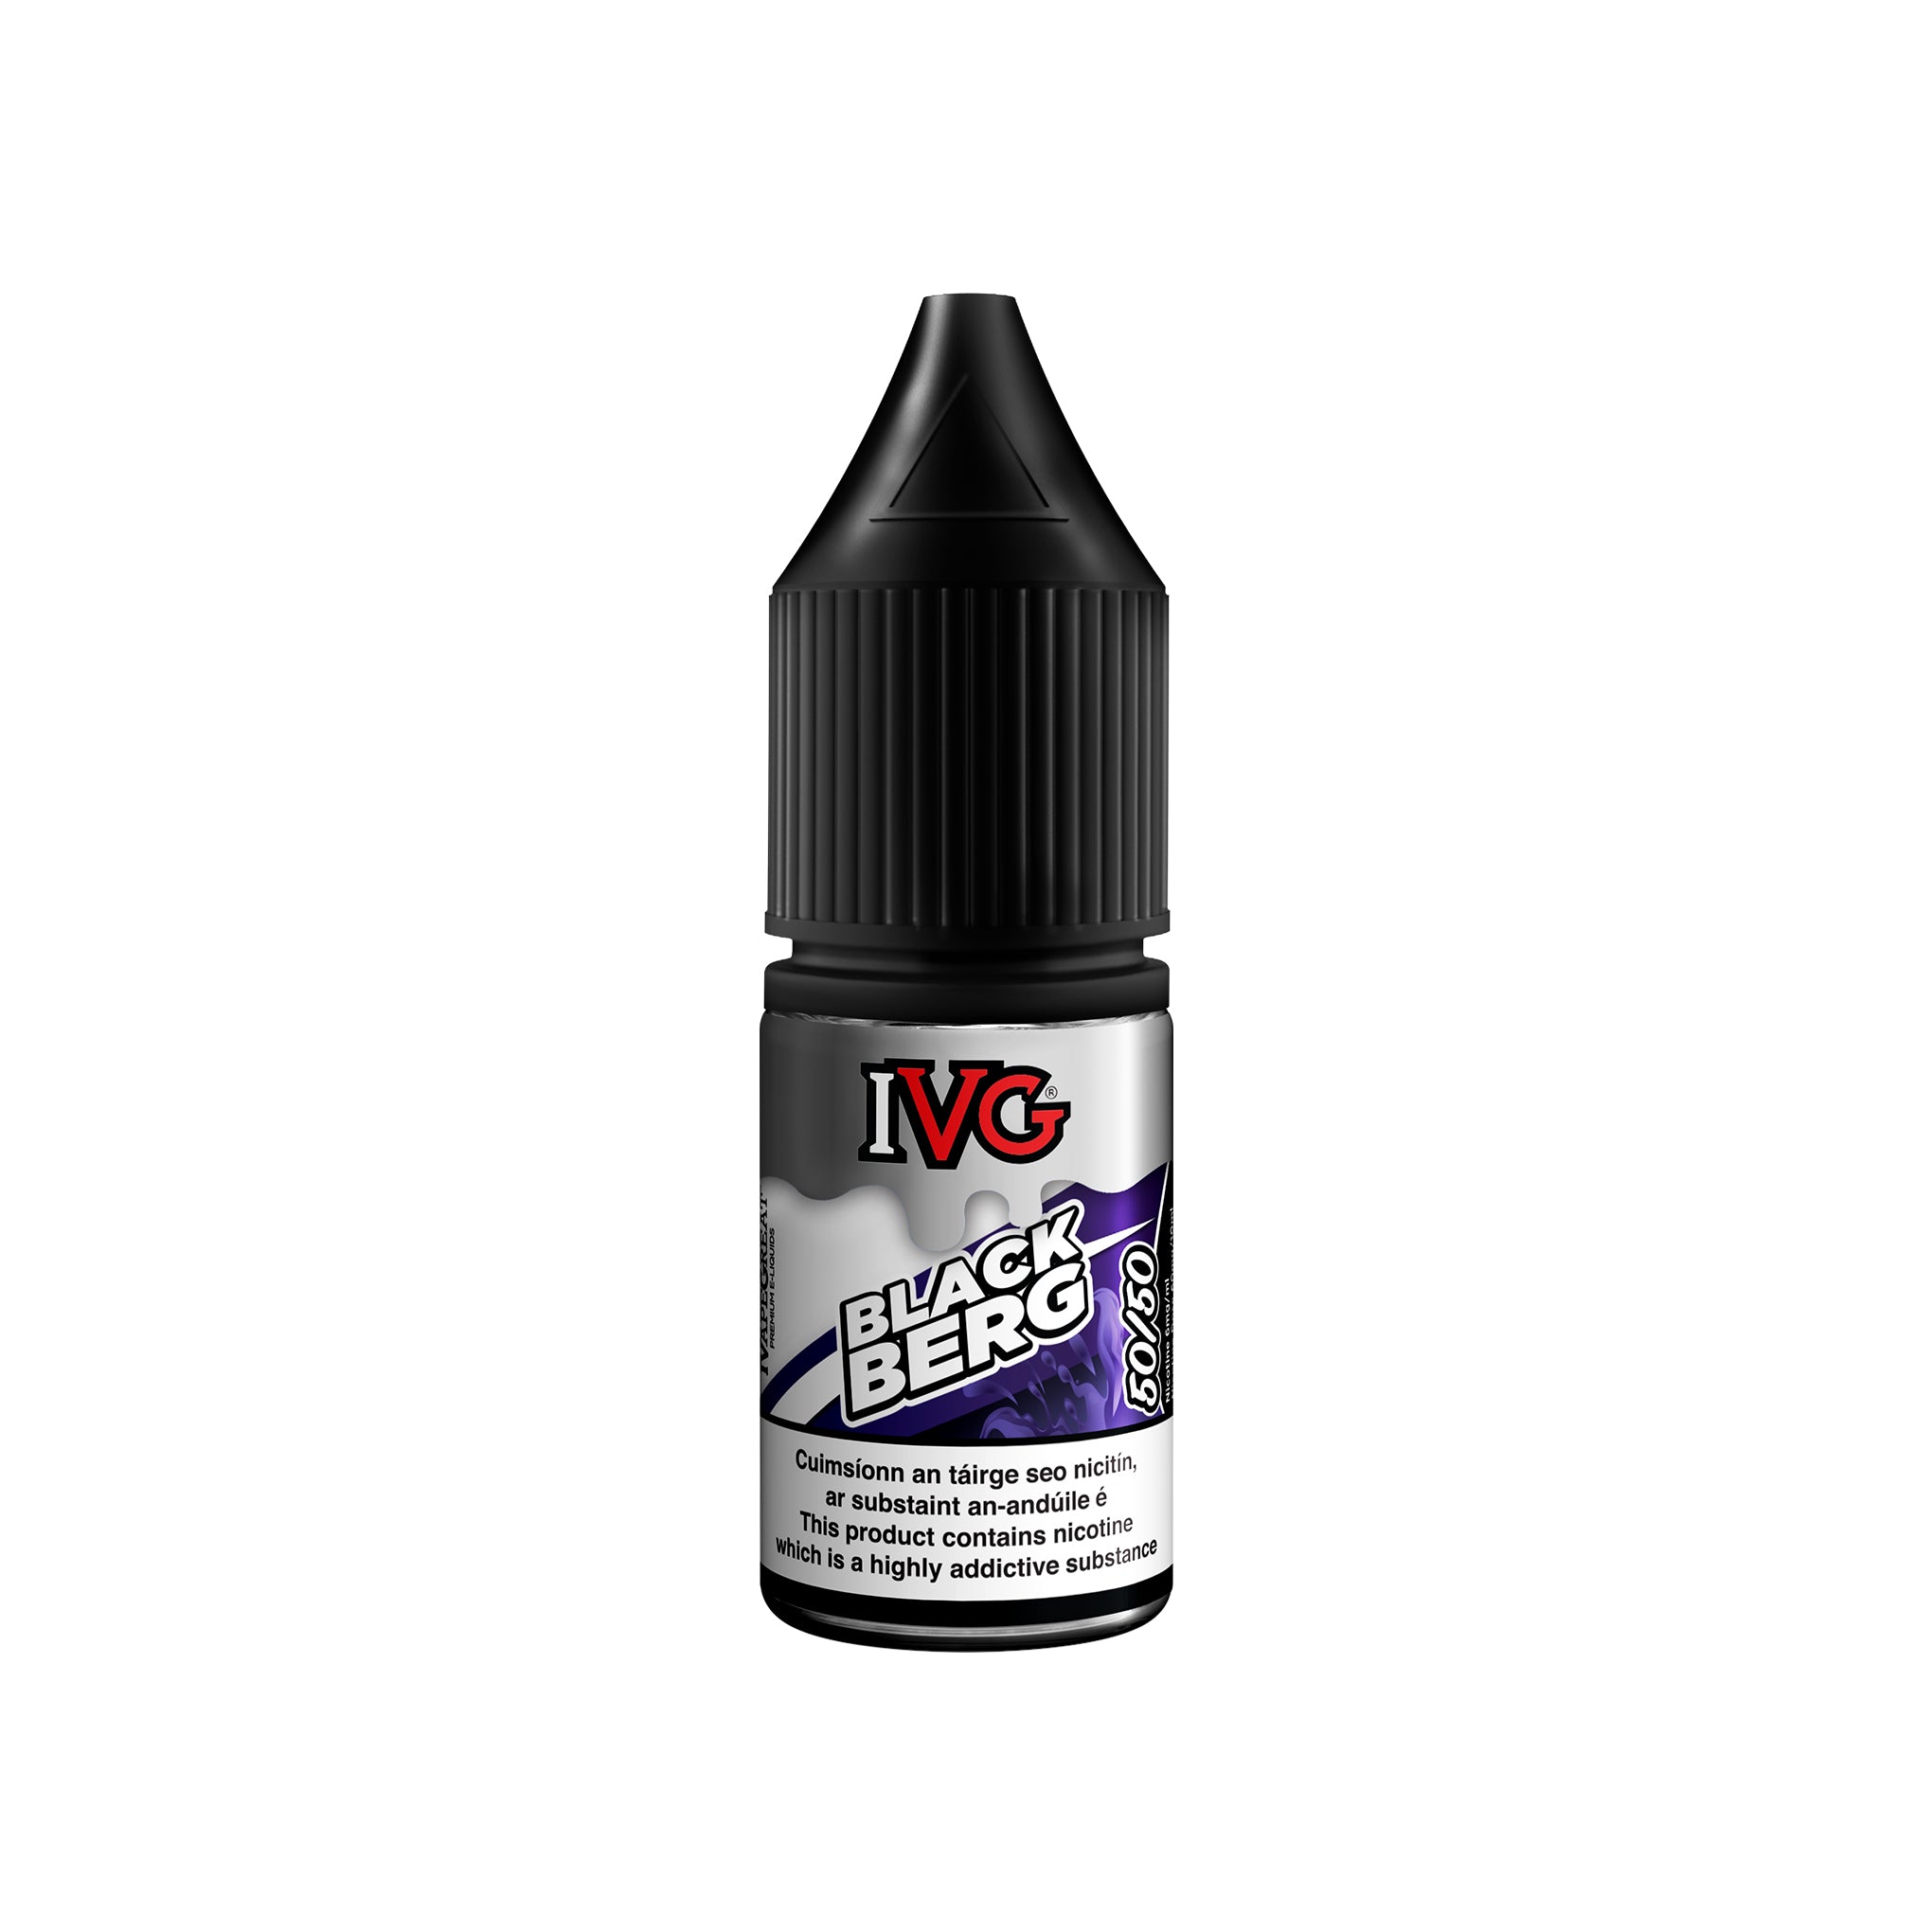 IVG 50/50 Iced Range E-Liquid Blackberg 3MG - Very Low Nicotine 